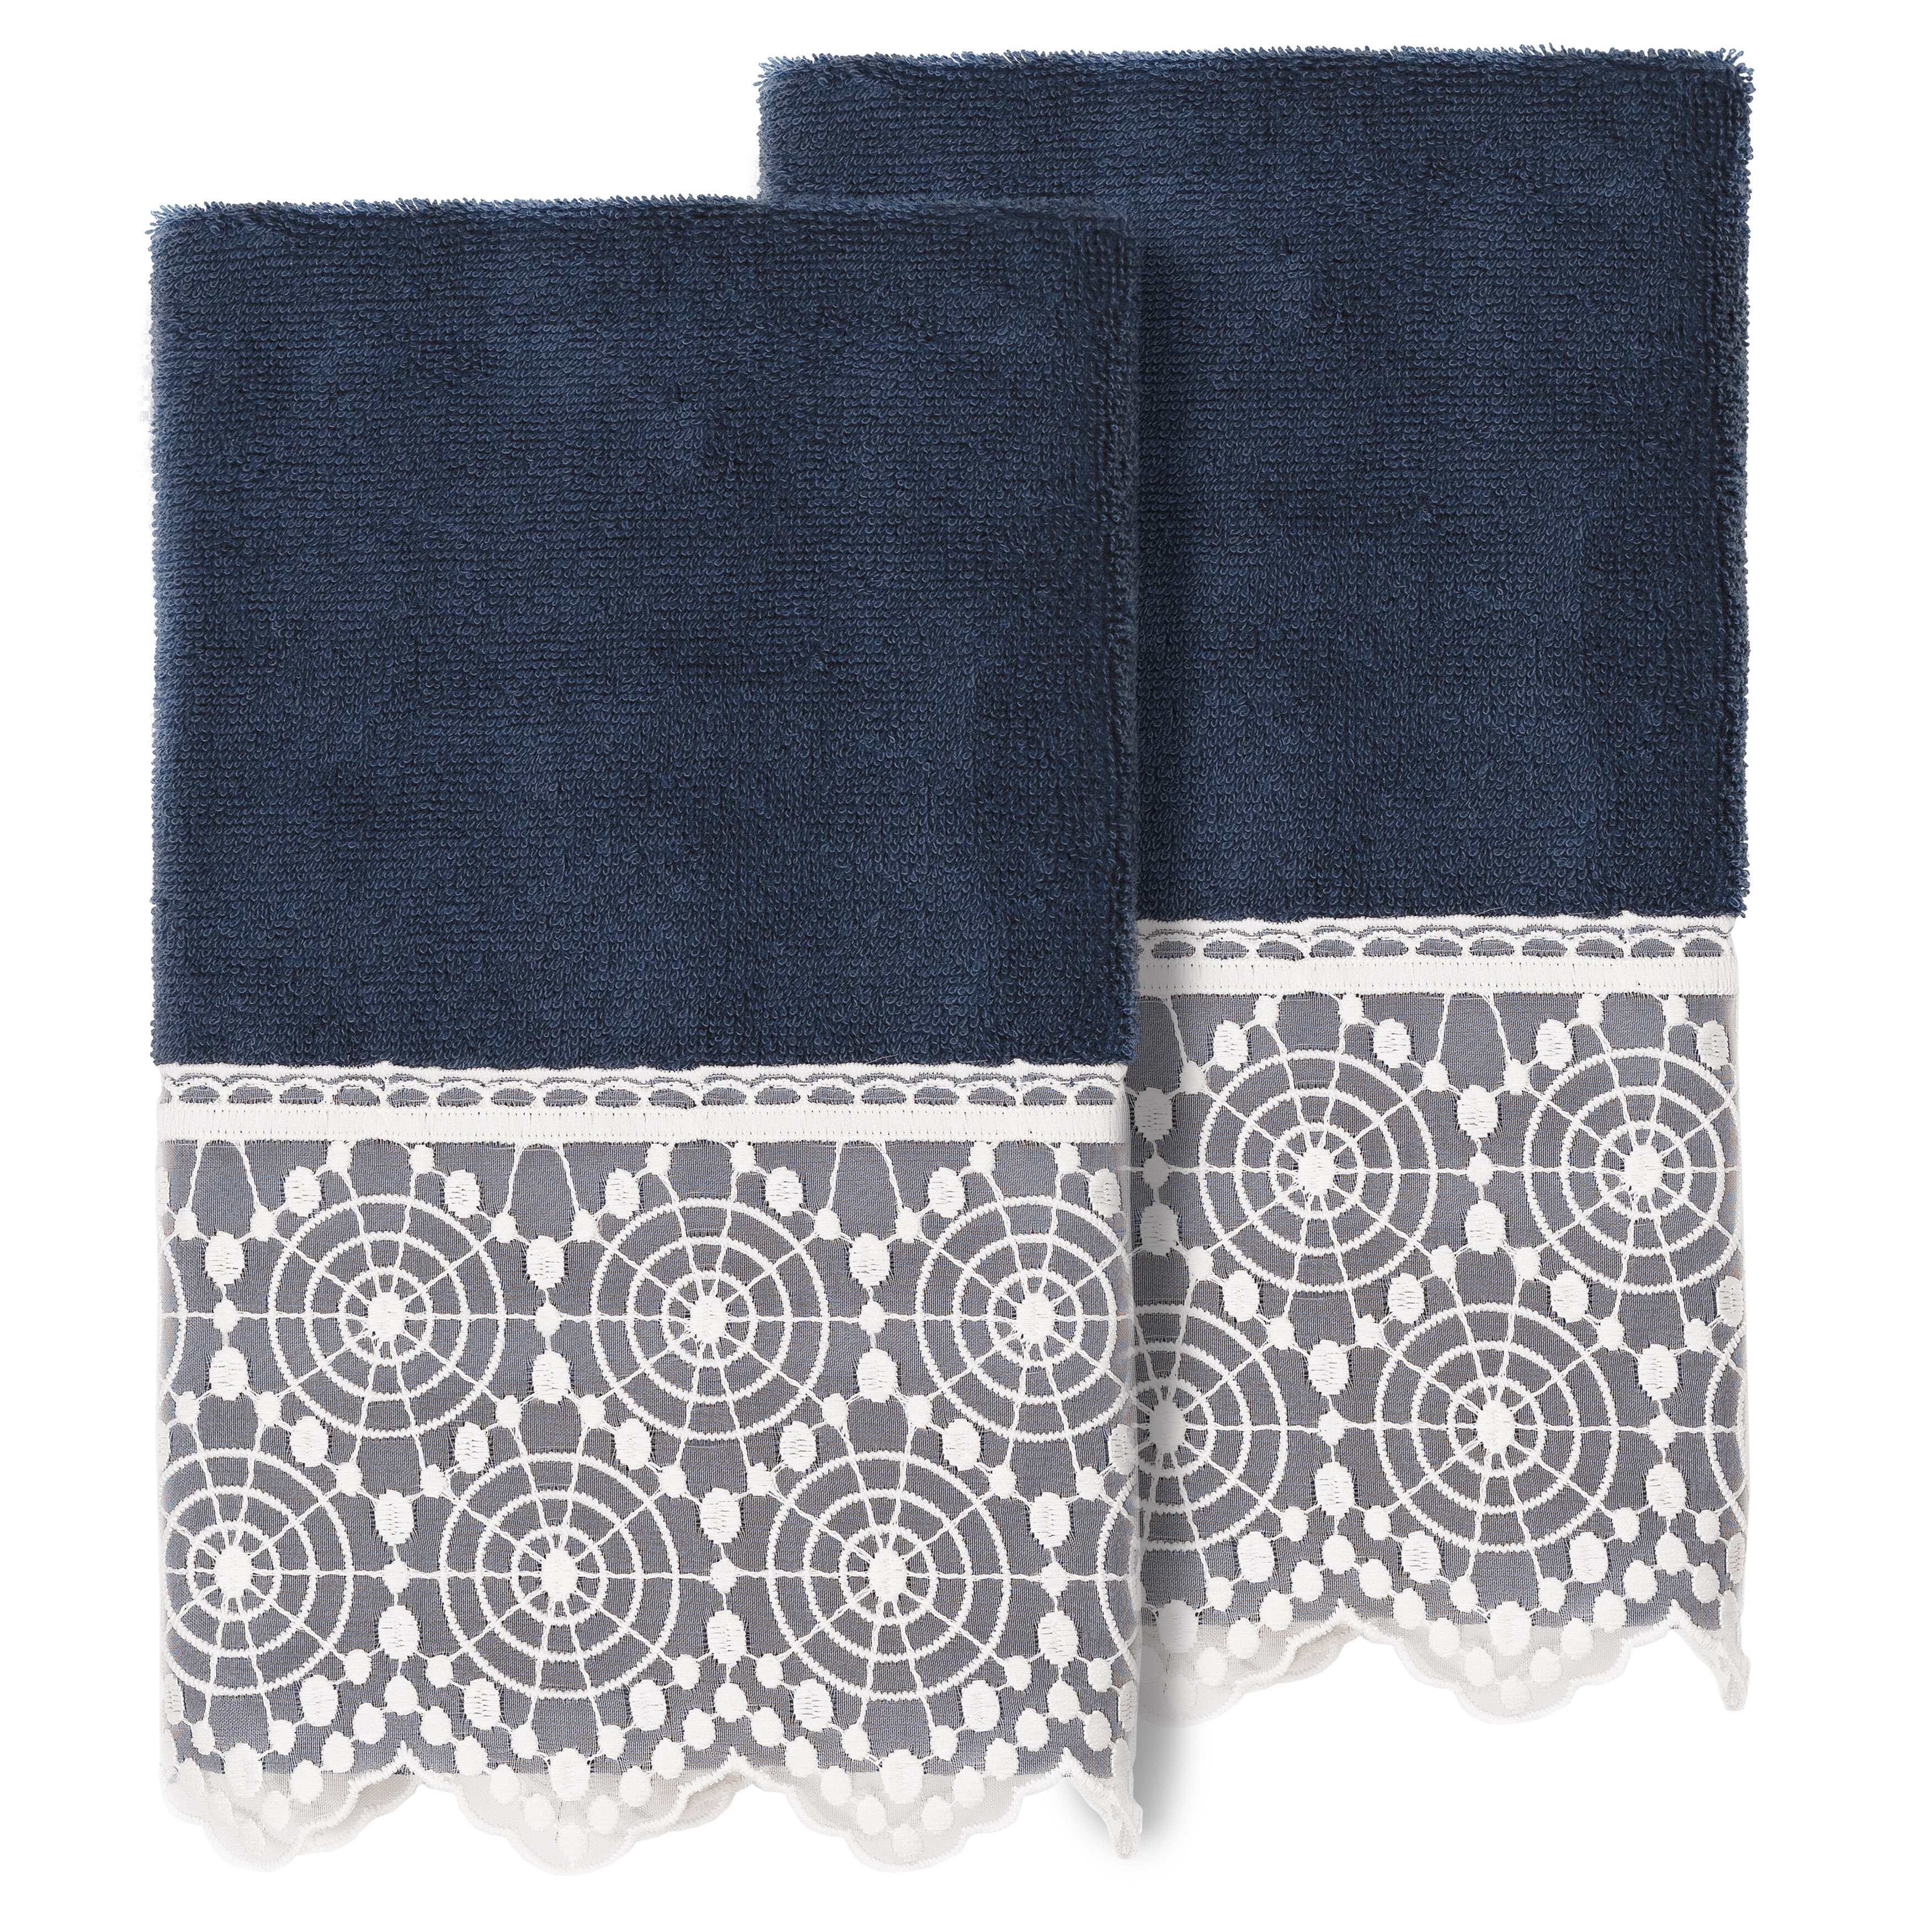 16X30 Charcoal Grey Hand Towels Premium 100% cotton